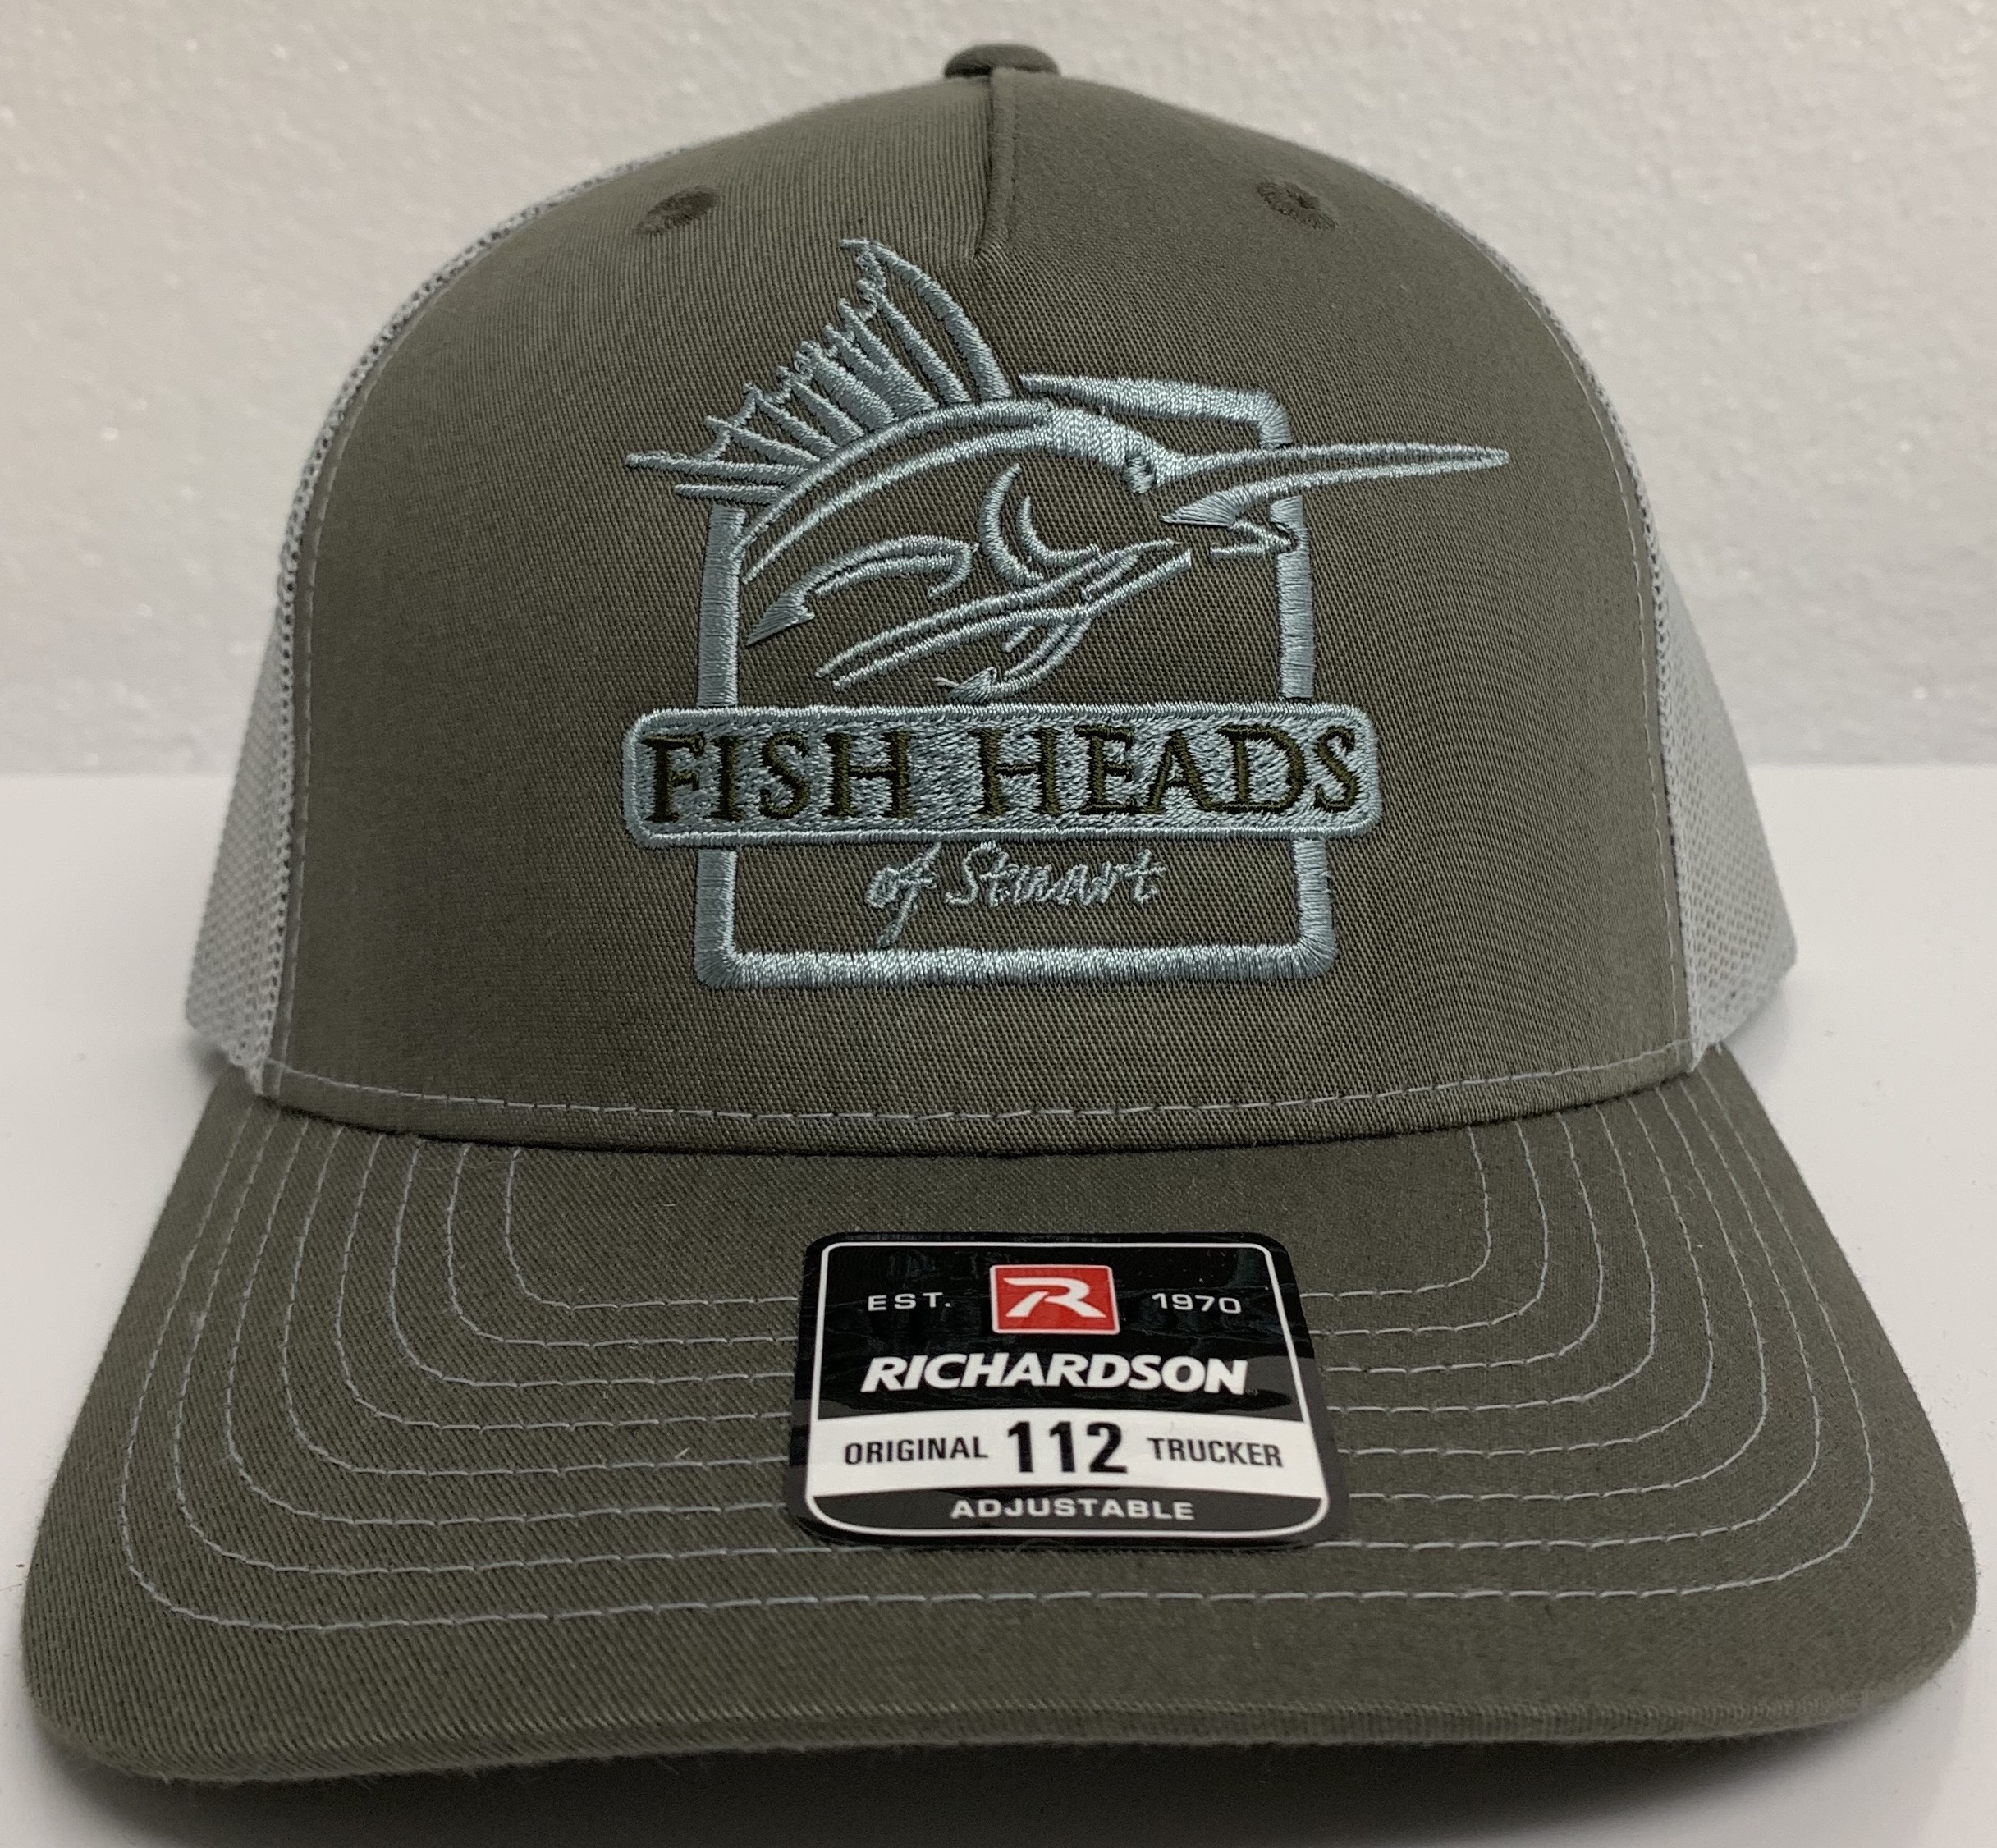 https://fishheadsofstuart.com/wp-content/uploads/2020/10/Fish-Heads-Embroidered-Trucker-Hat-Richardson-112.jpg